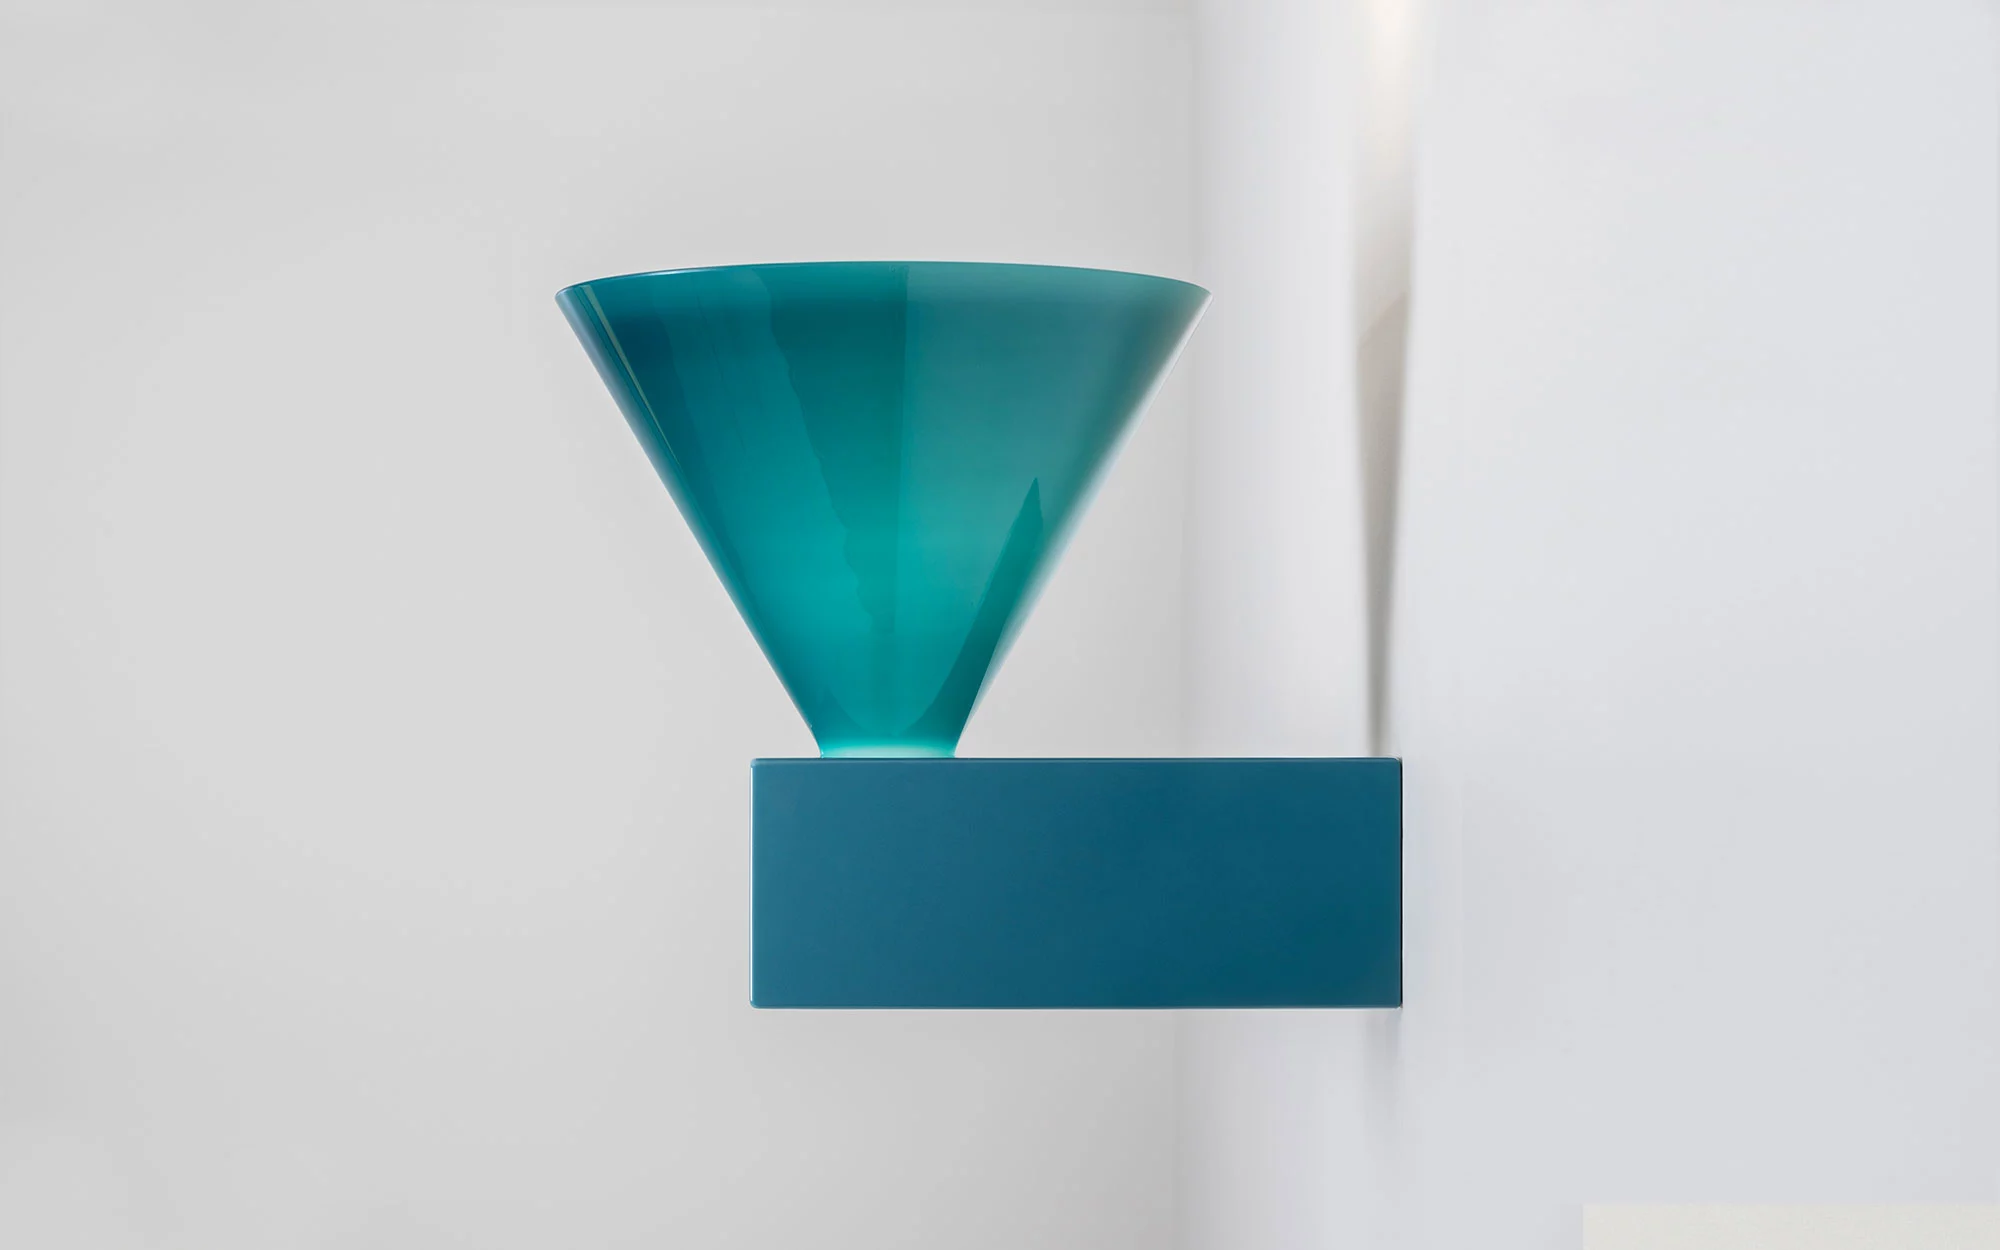 Signal W MONOCHROMATIC - Edward Barber and Jay Osgerby - Coffee table - Galerie kreo